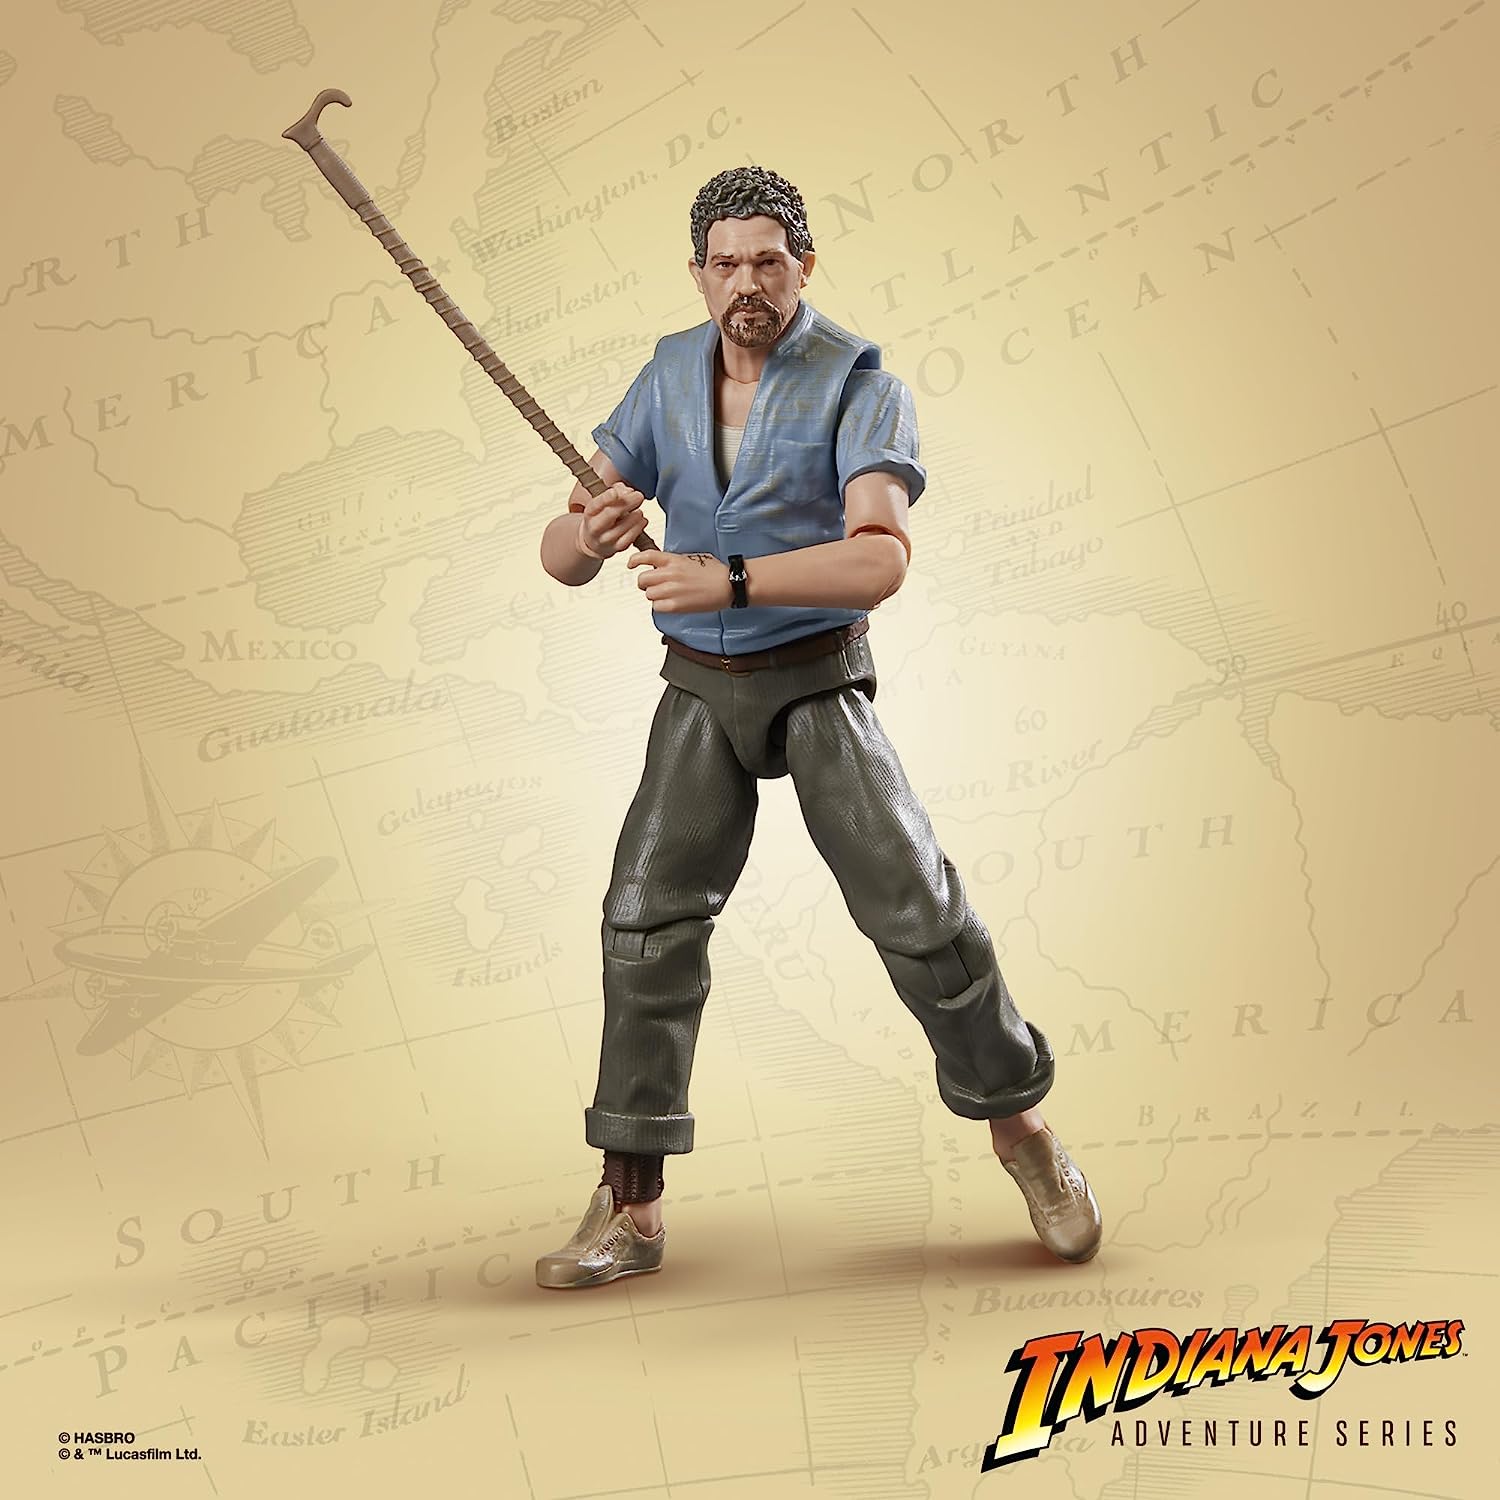 Indiana Jones Adventure Series Renaldo(Dial of Destiny) 6-Inch Action Figure 正規品画像